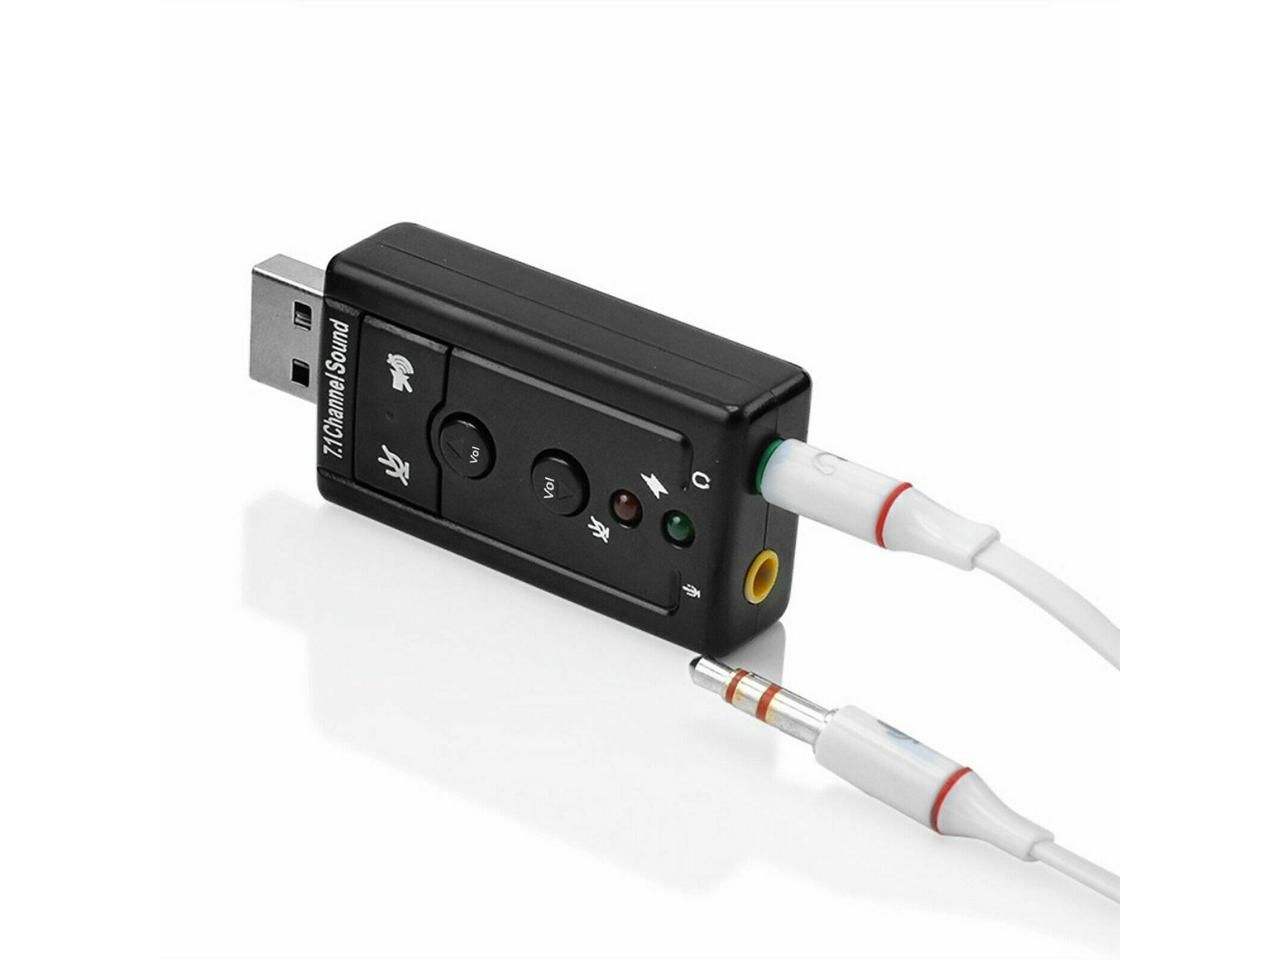 USB 2.0 External 7.1 Channel 3D Virtual Audio Sound Card Mic Adapter Laptop PC 